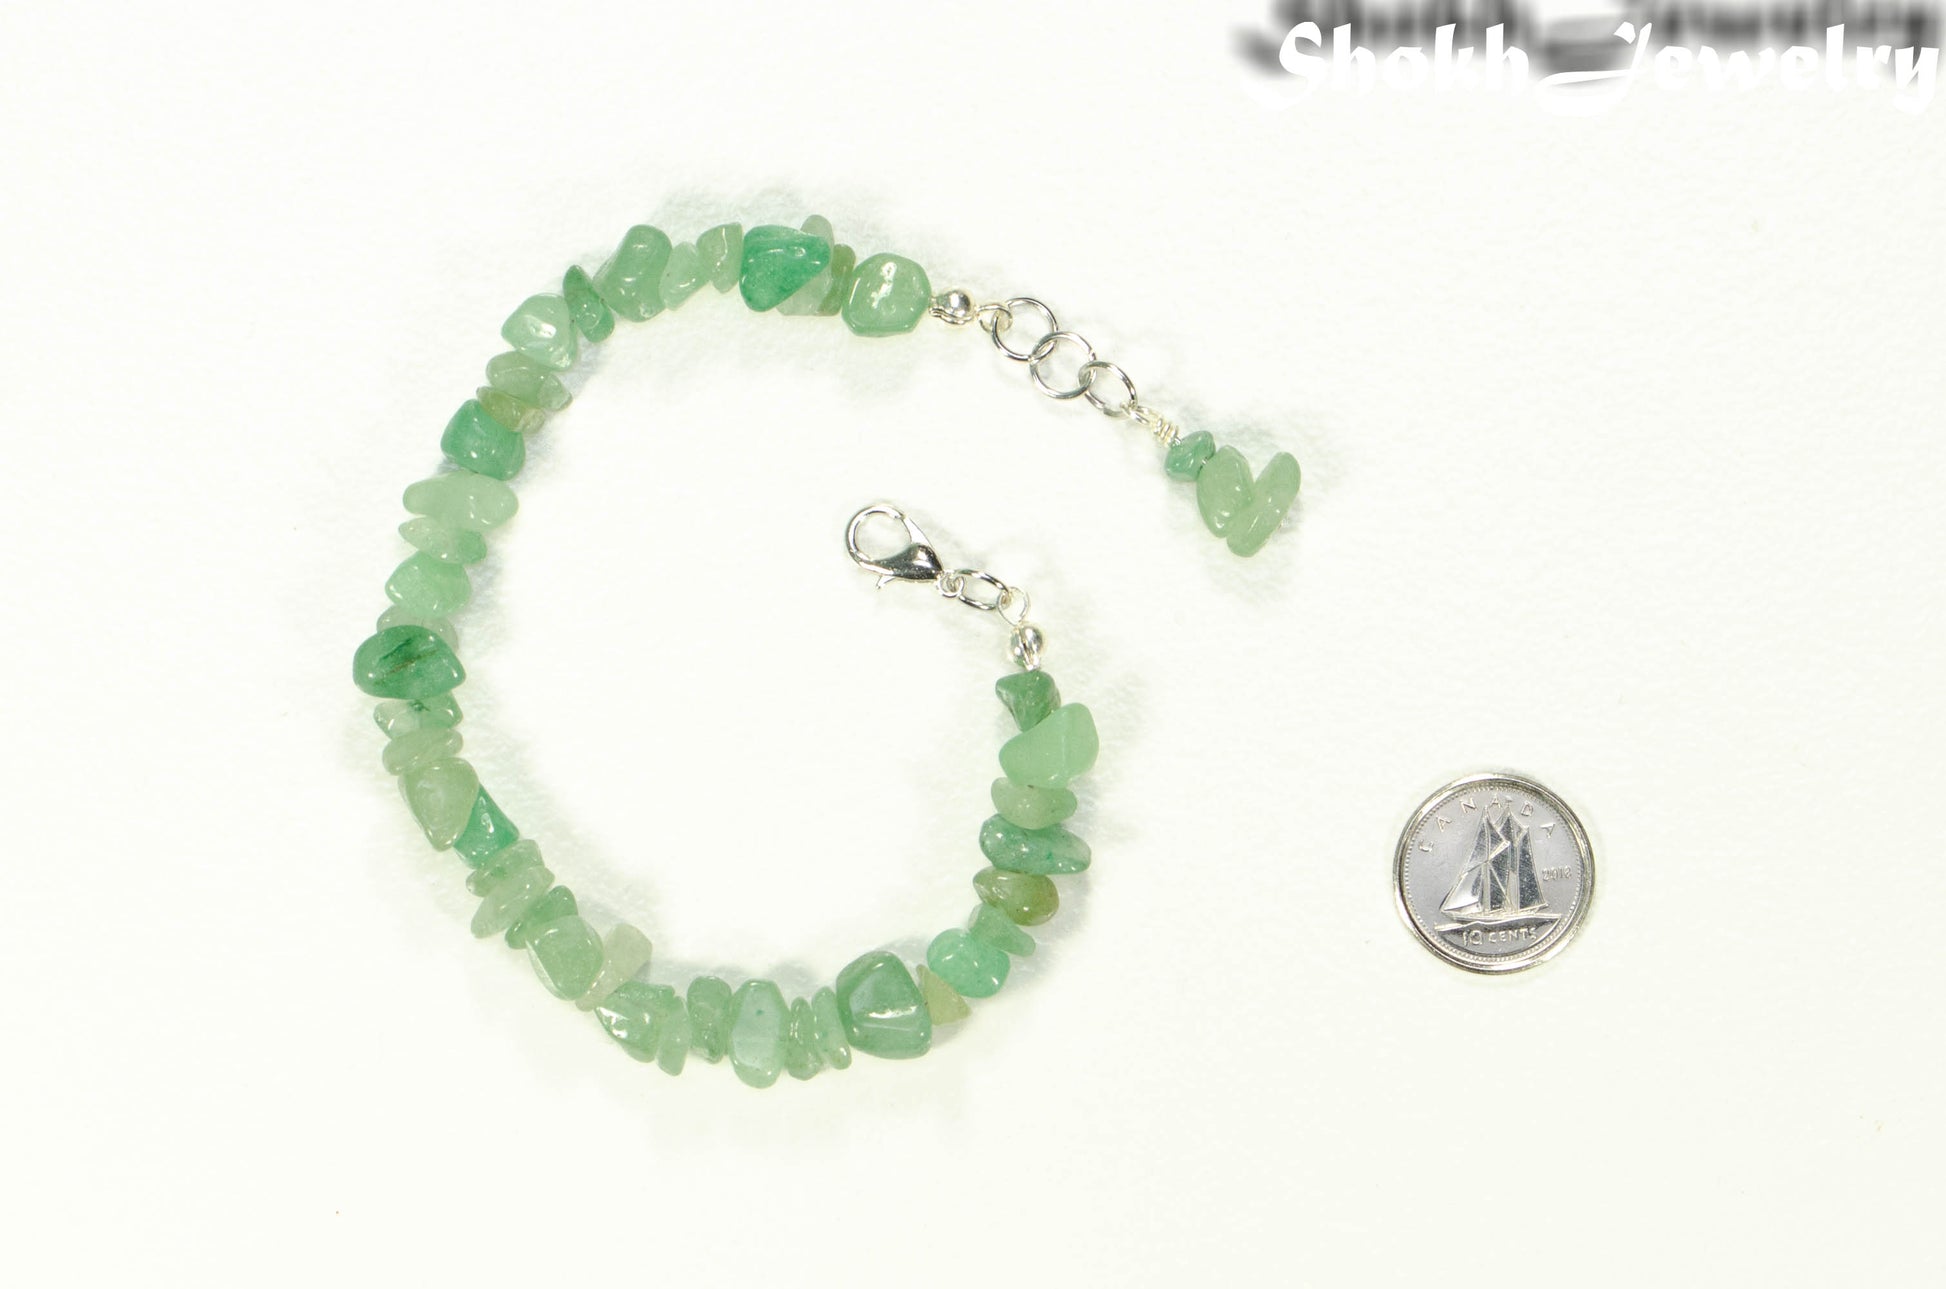 Natural Green Aventurine Crystal Chip Bracelet beside a dime.